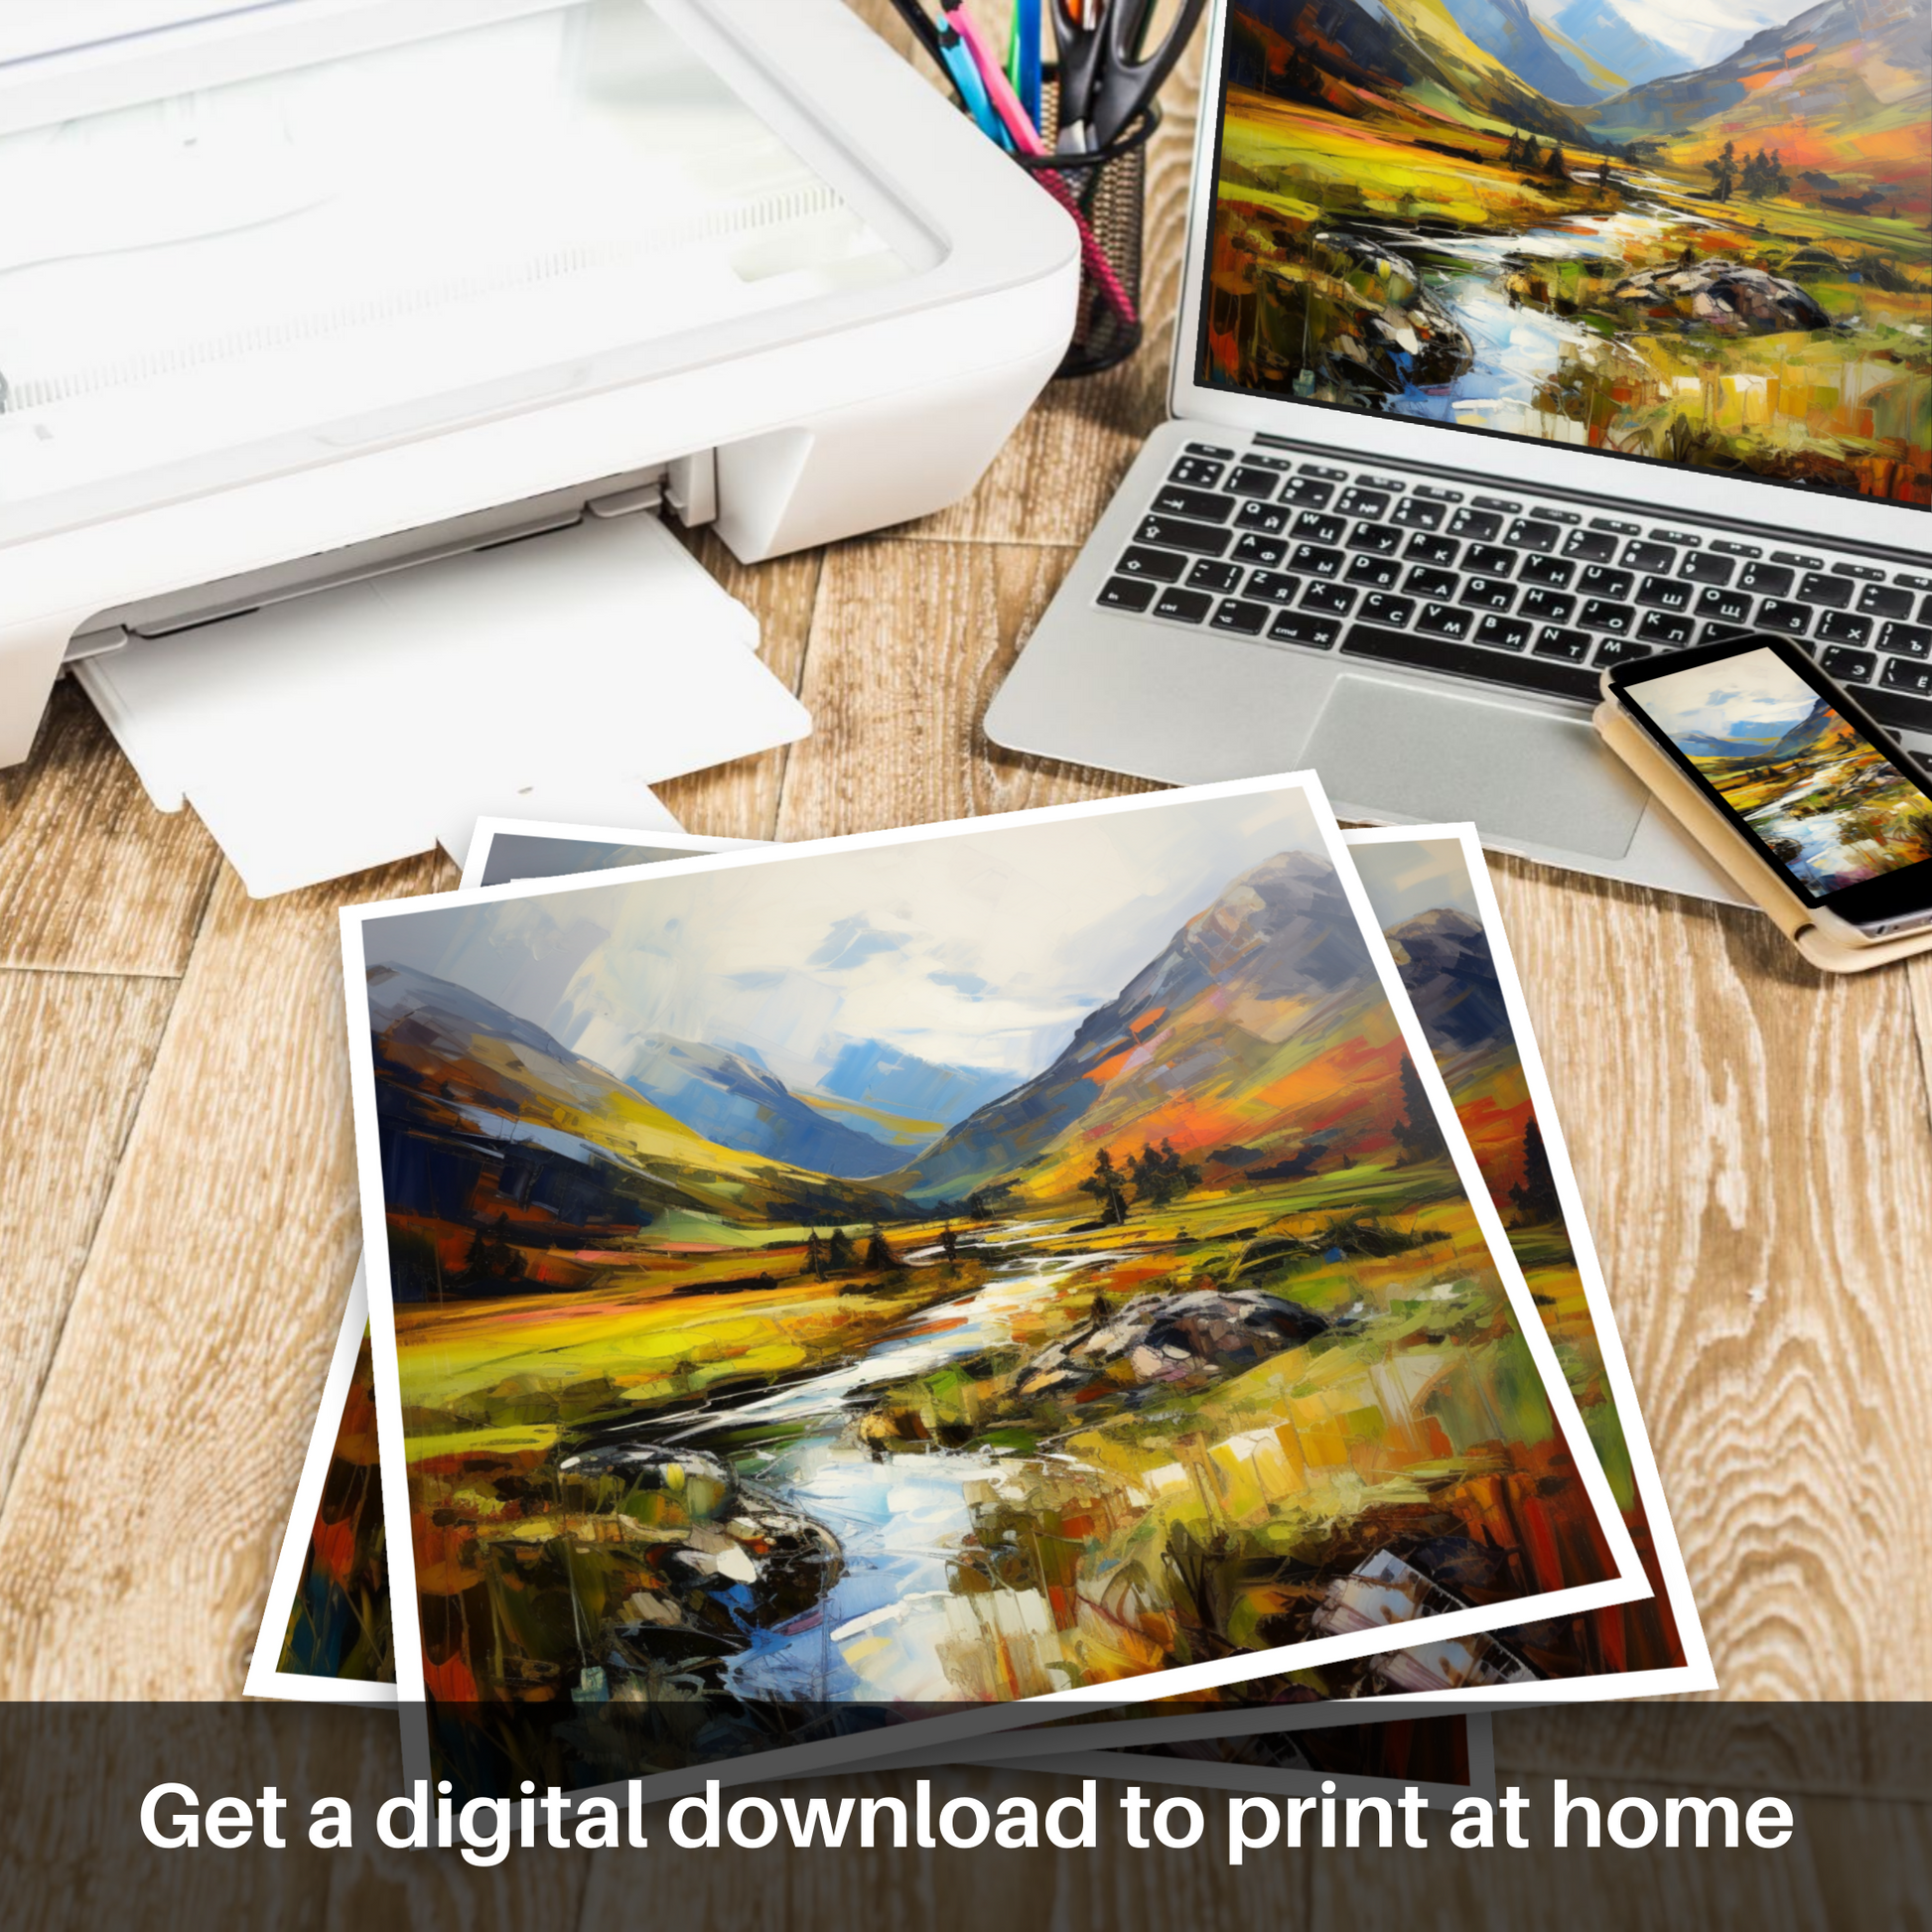 Downloadable and printable picture of Glen Strathfarrar, Highlands